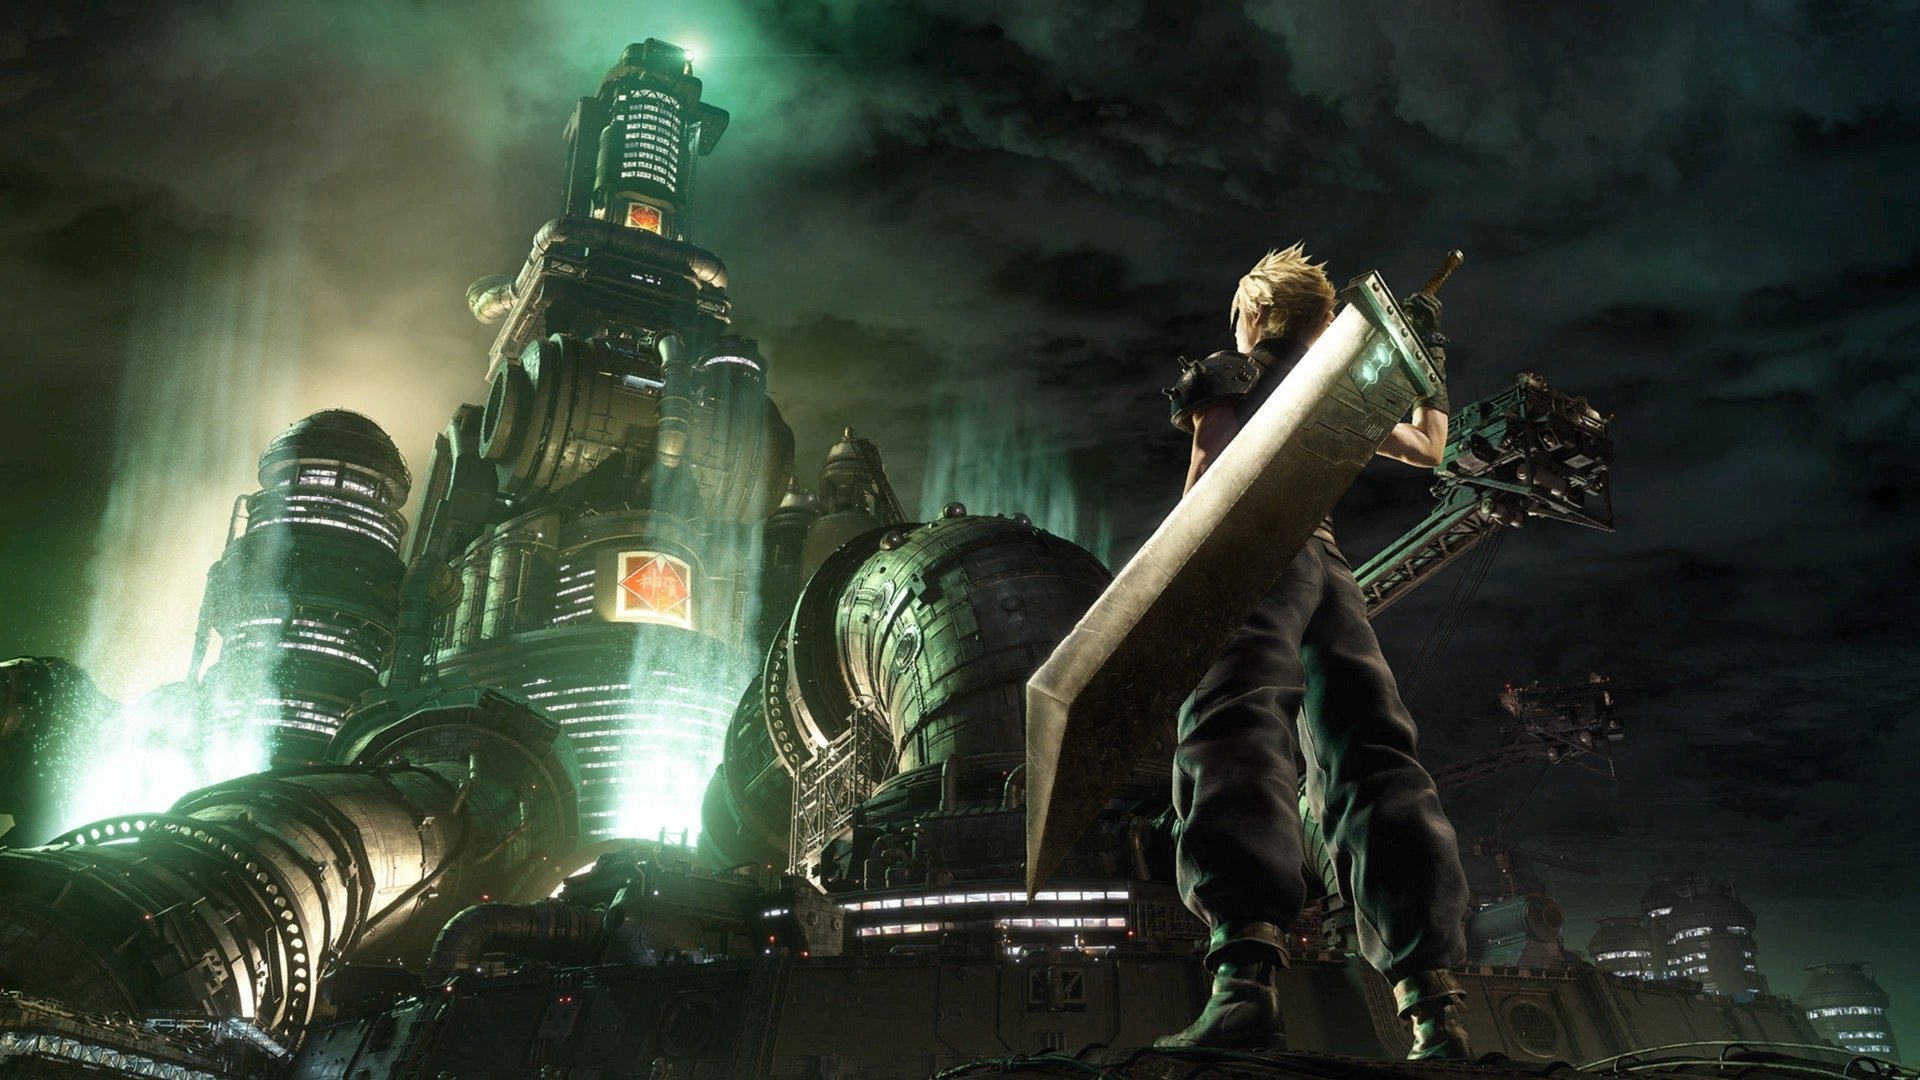 Final Fantasy VII Remake (for PlayStation 4) Review